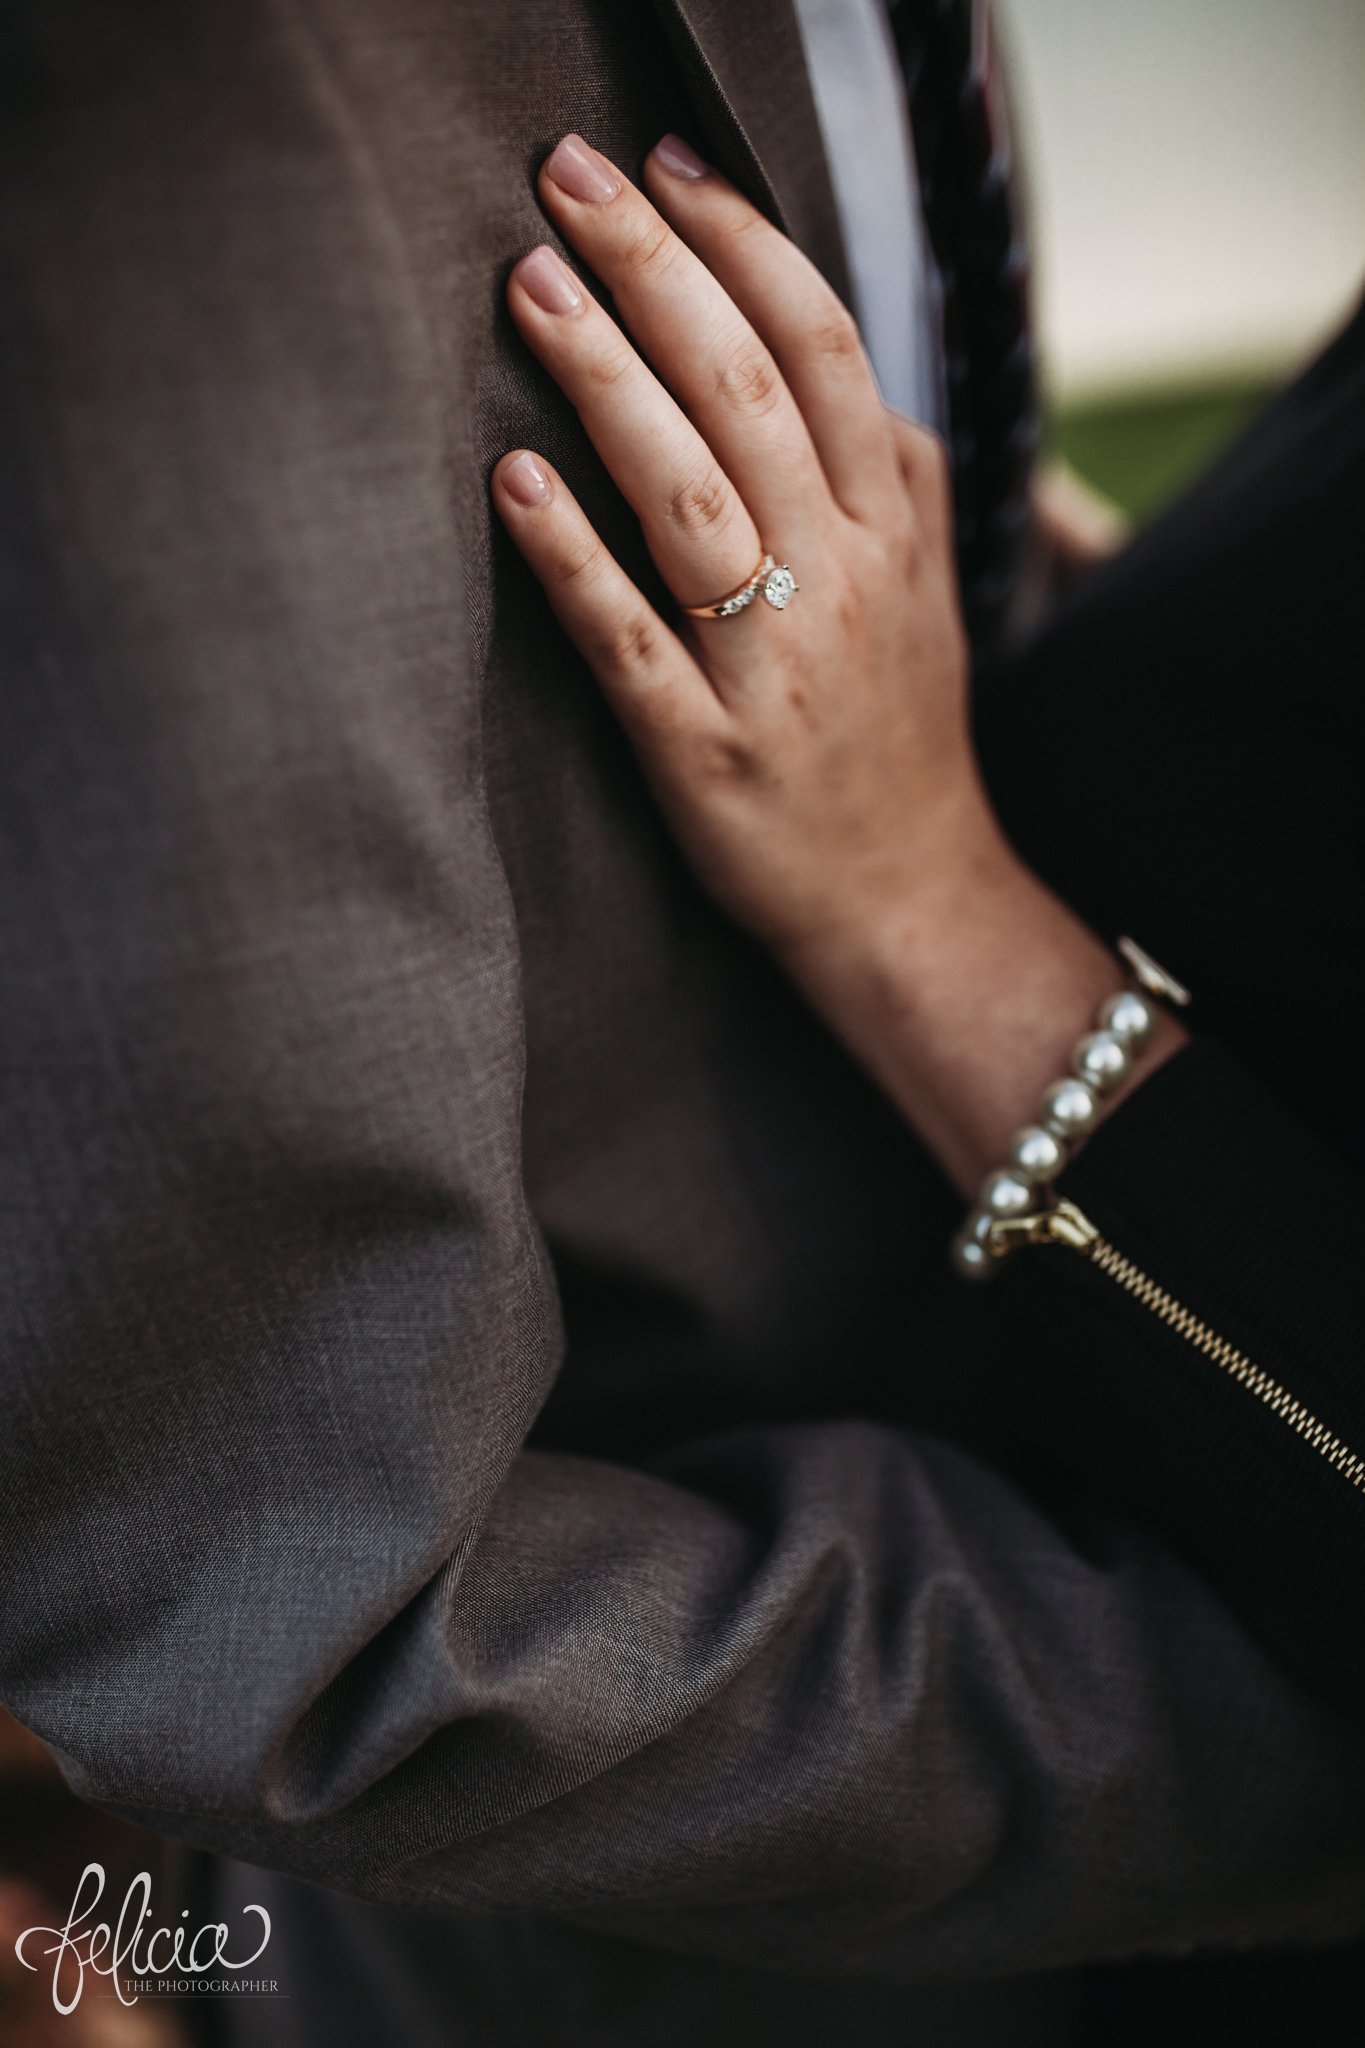 images by feliciathephotographer.com | wedding photographer | kansas city missouri | engagement | diamond ring | pearls | details | classy | true love | romantic | gold 